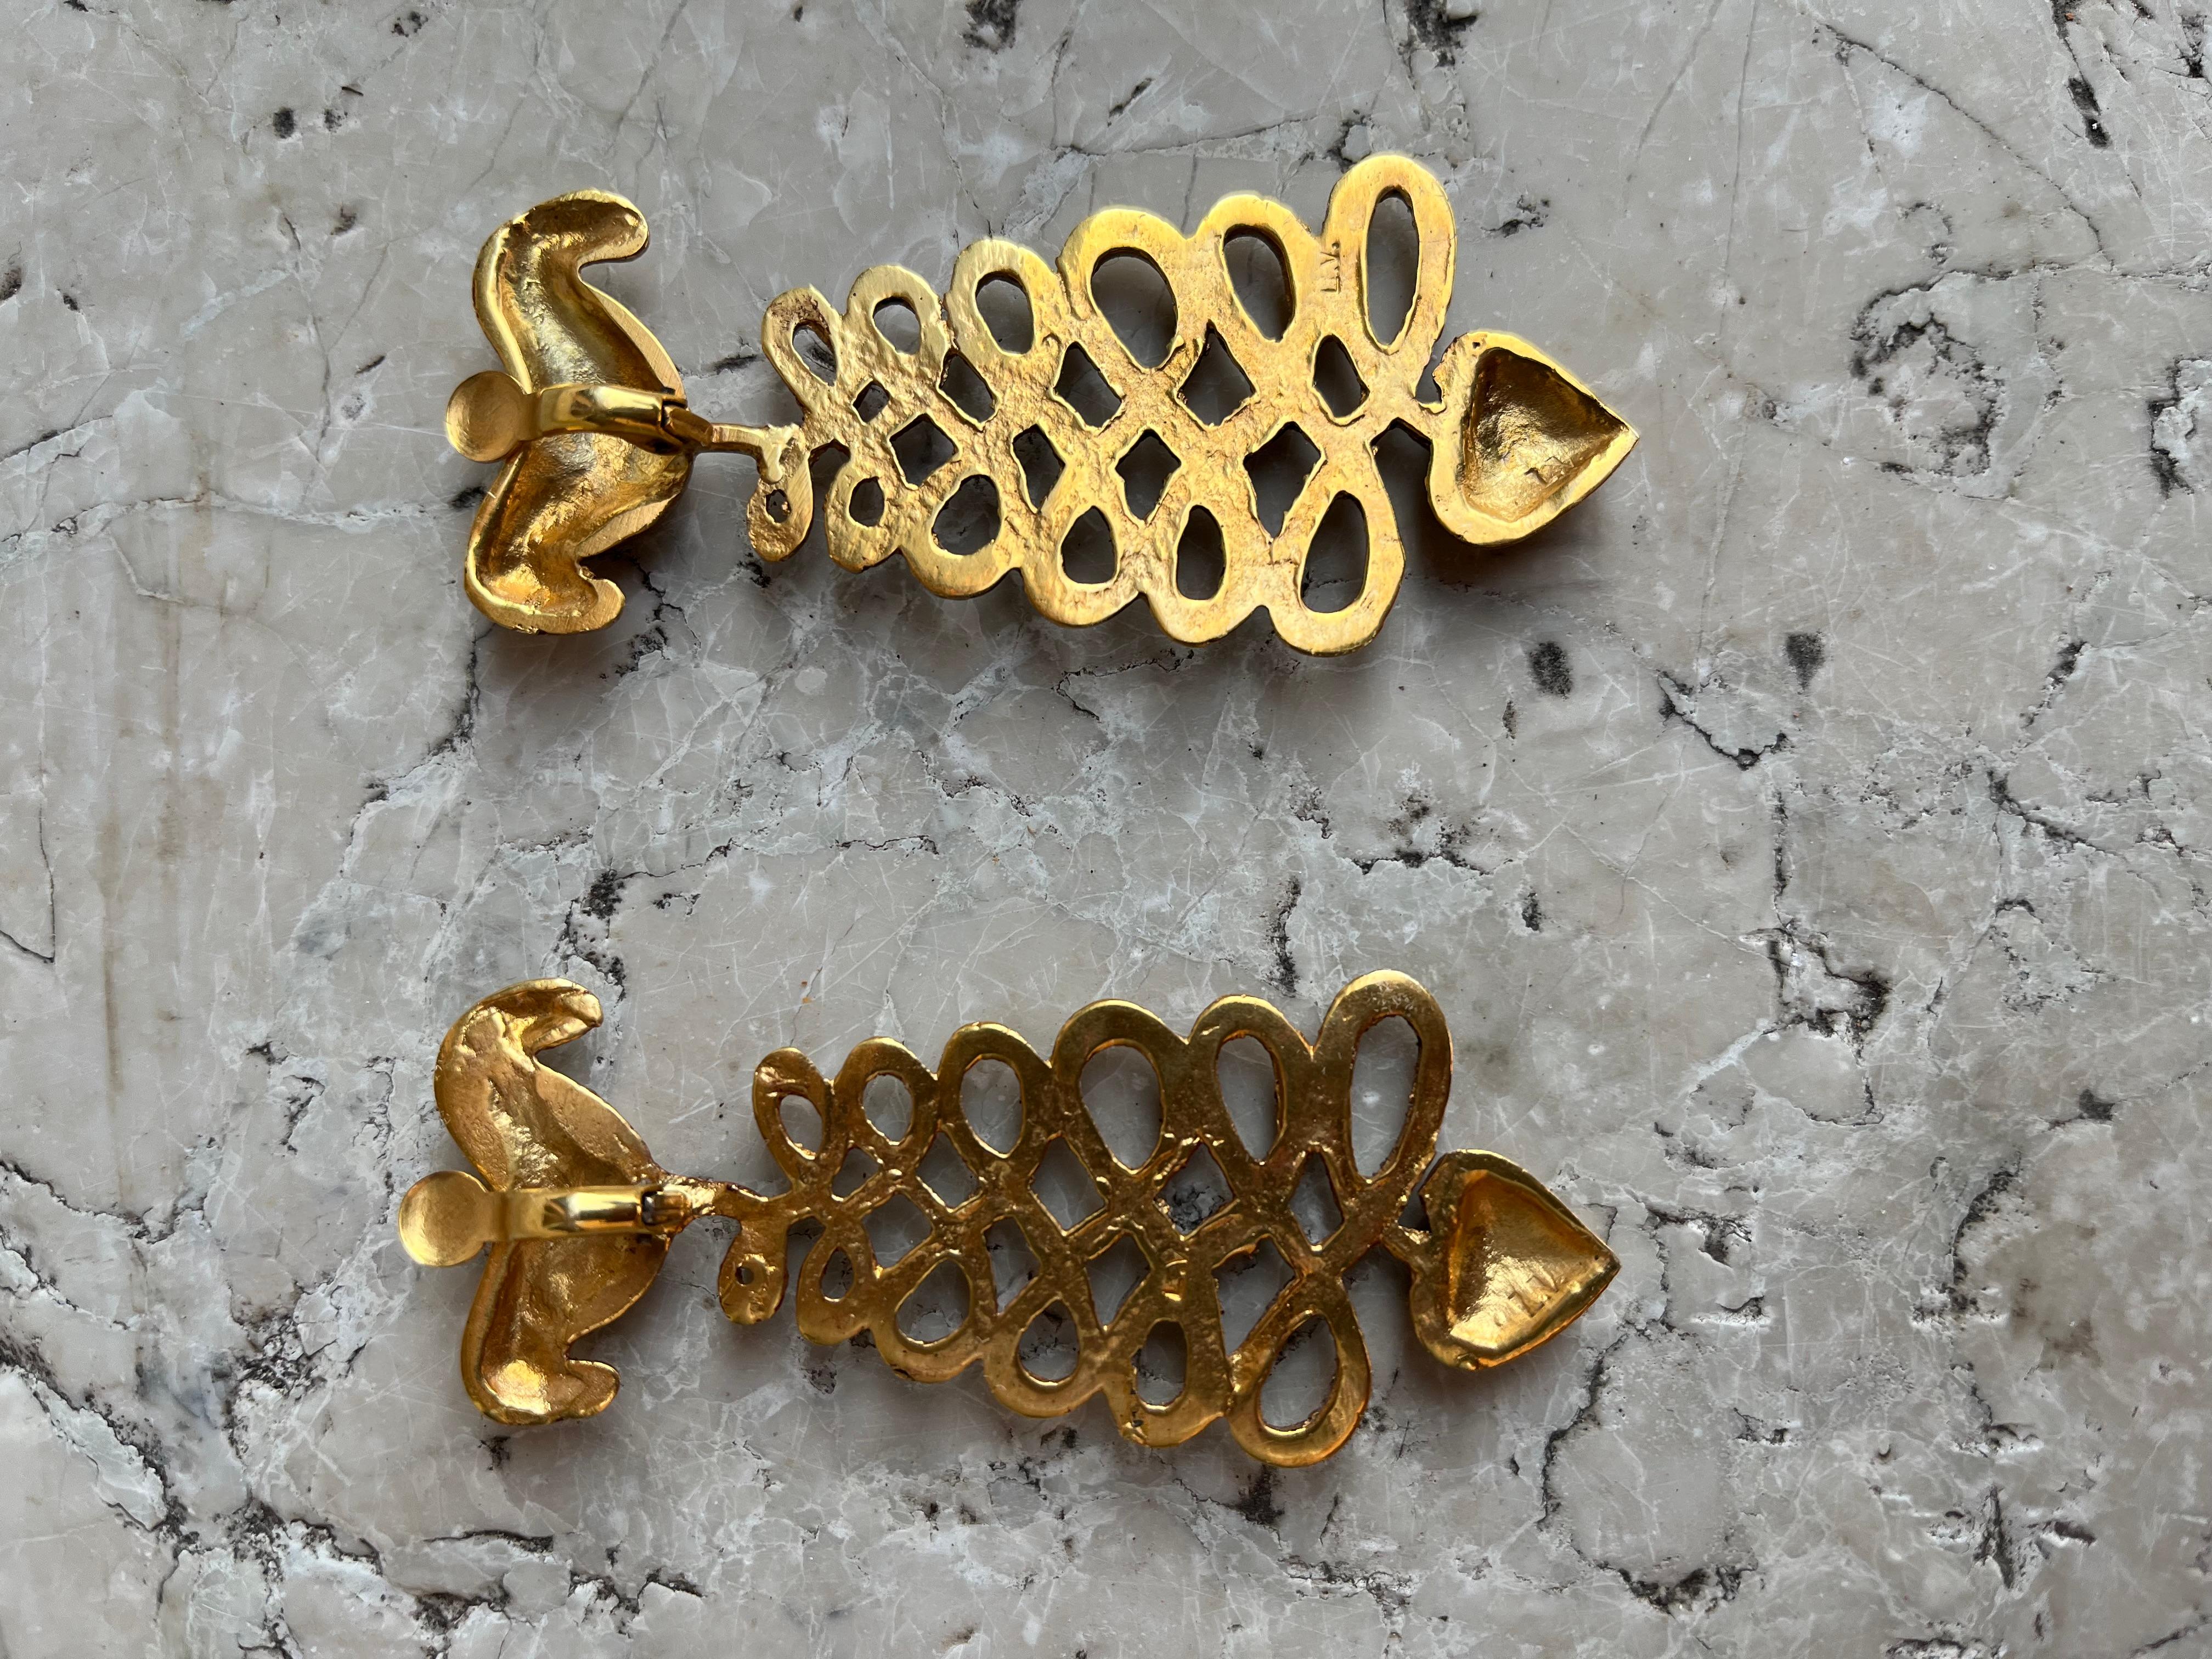 One pair of earrings by Line Vautrin - Entrelacs et Coeurs
Gilt Bronze - Circa 1960
Signed LV